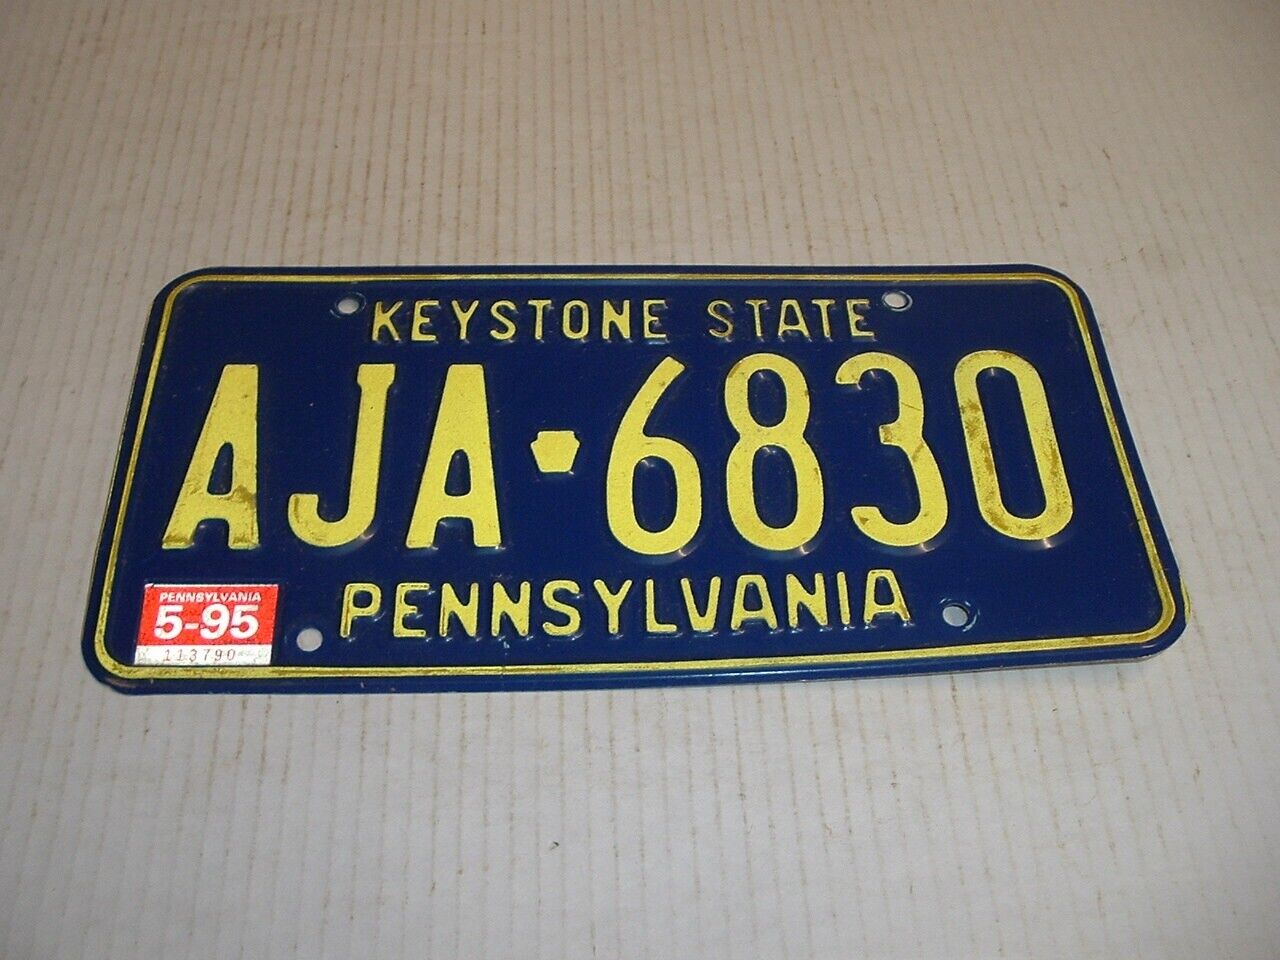 Pennsylvania 1995 Keystone State License Plate AJA 6830